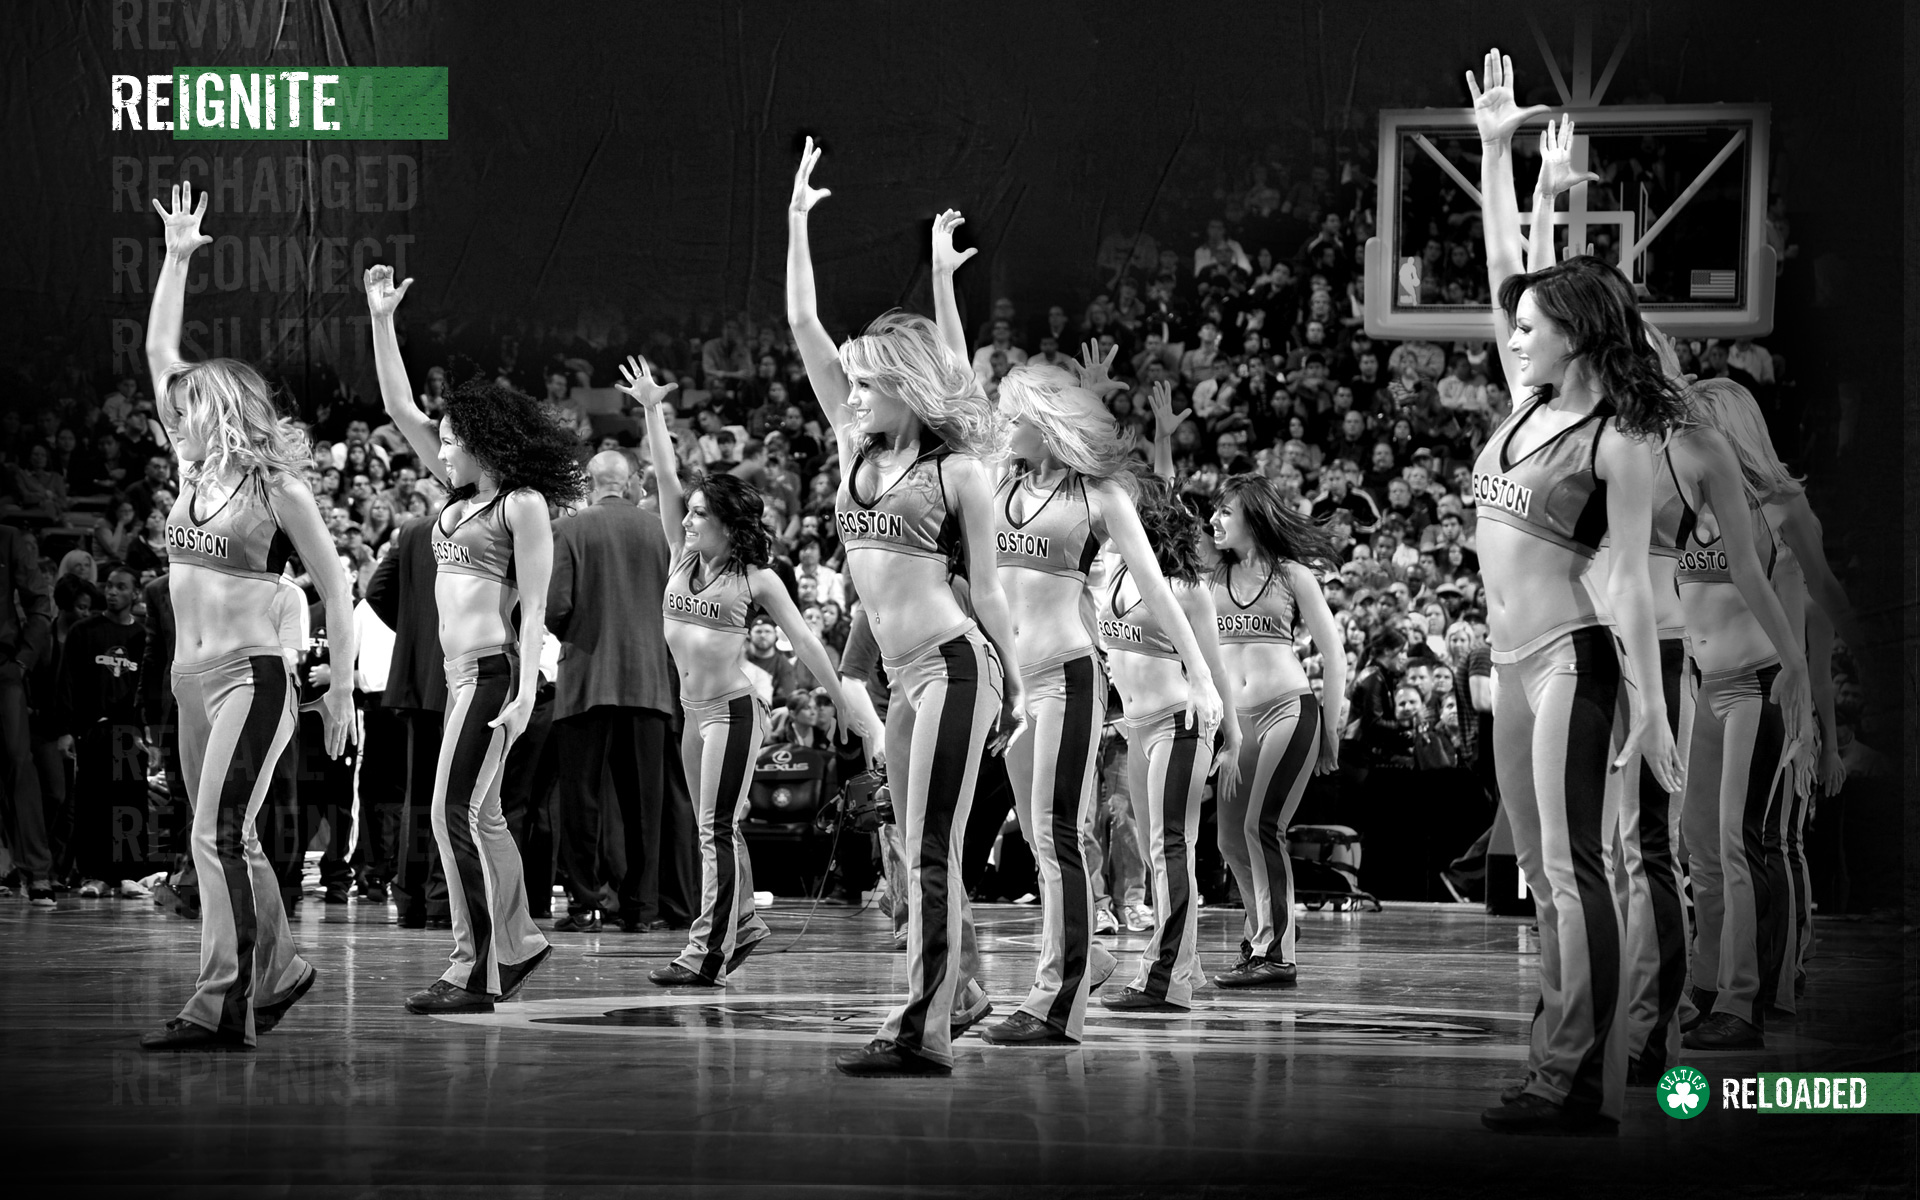 Celtics Dancers Wallpaper Boston